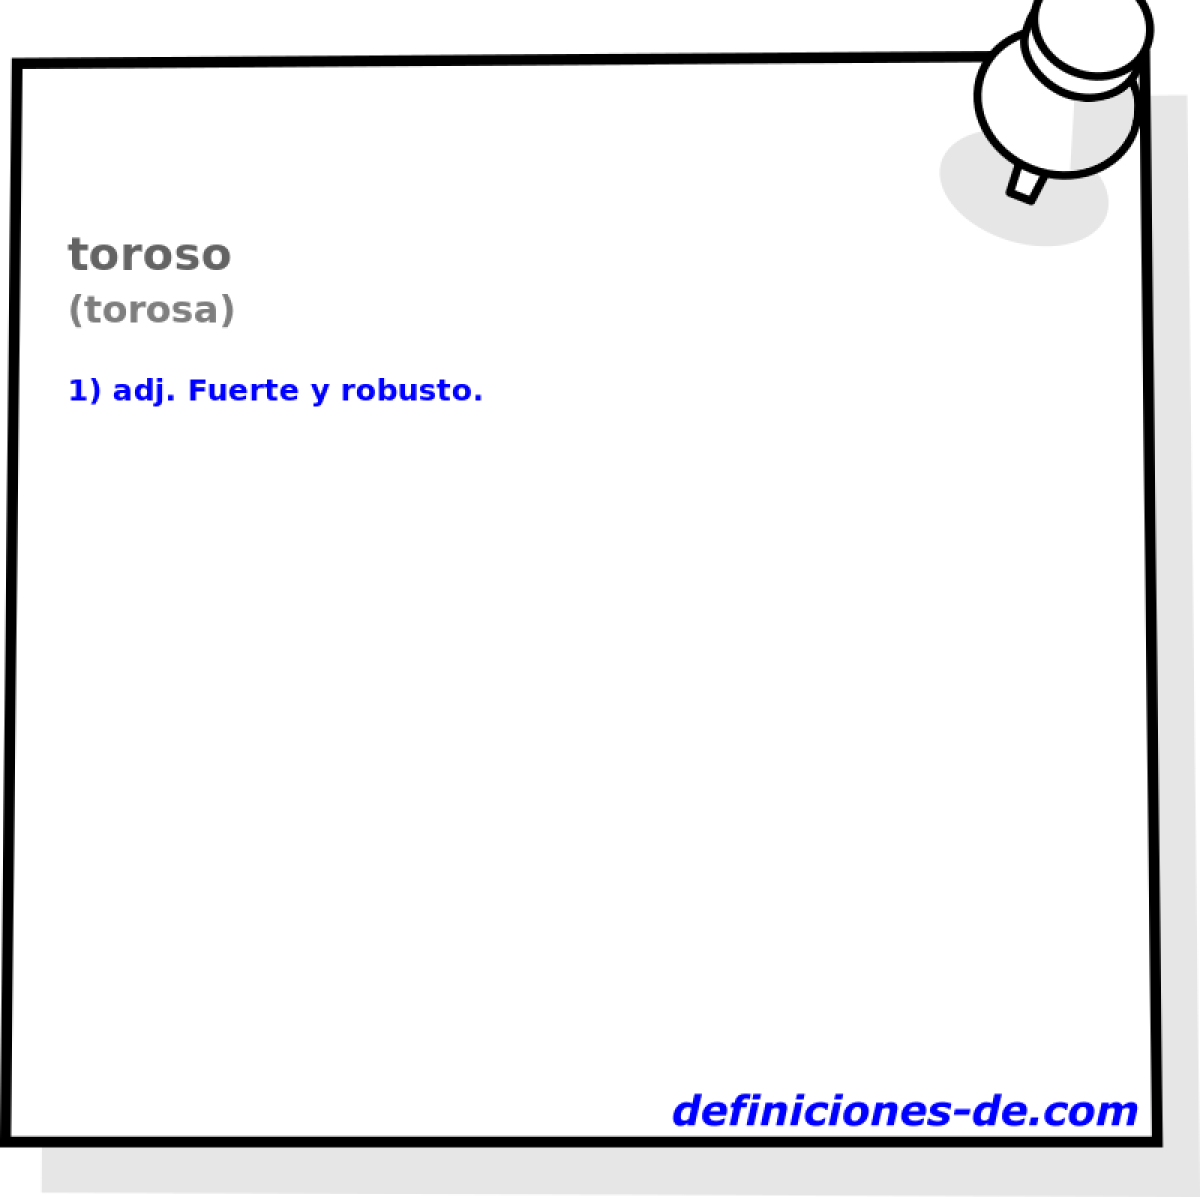 toroso (torosa)